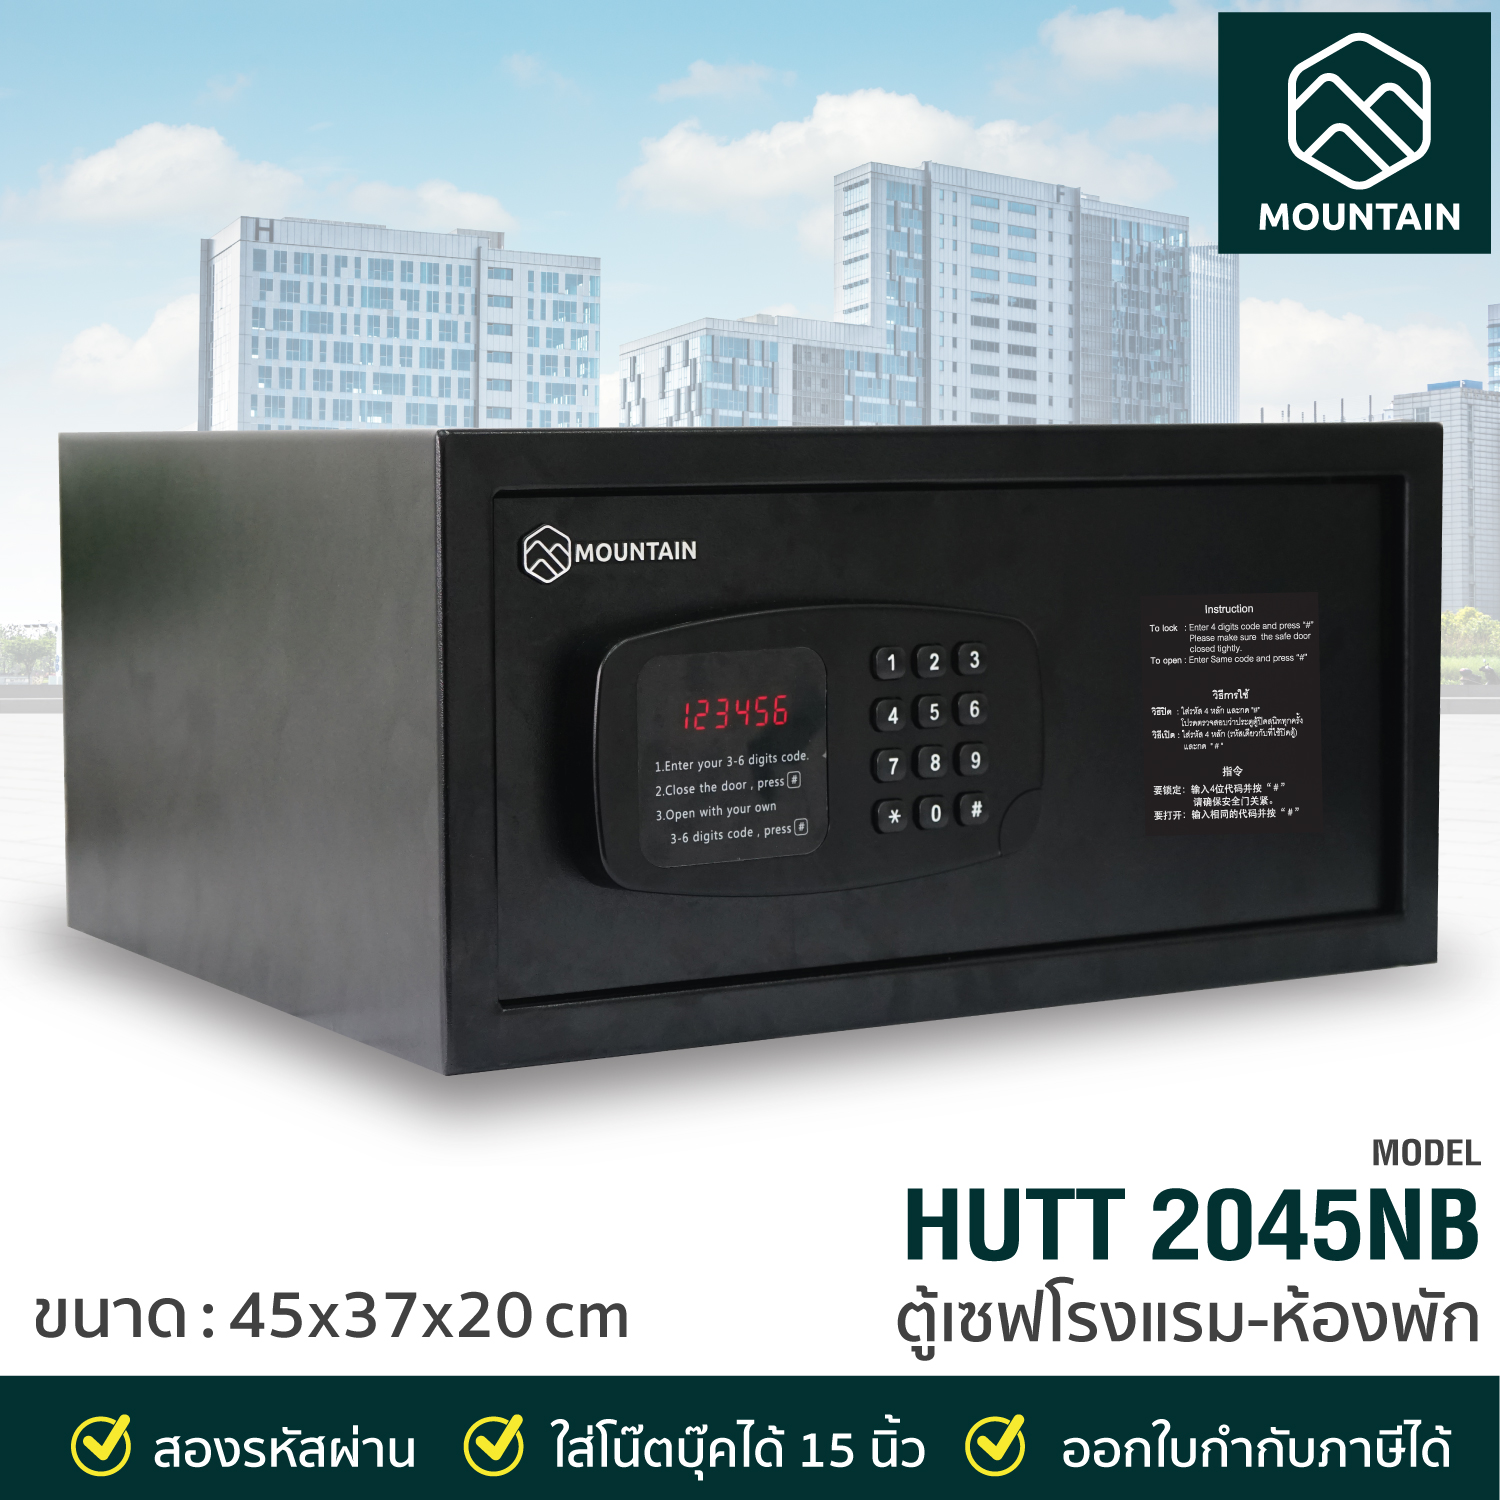 Mountain ตู้เซฟโรงแรม รุ่น Hutt 2045NB สีดำ (Size 45x37x20 cm.) ตู้เซฟห้องพัก ตู้เซฟนิรภัย HOTEL Electronic Safe